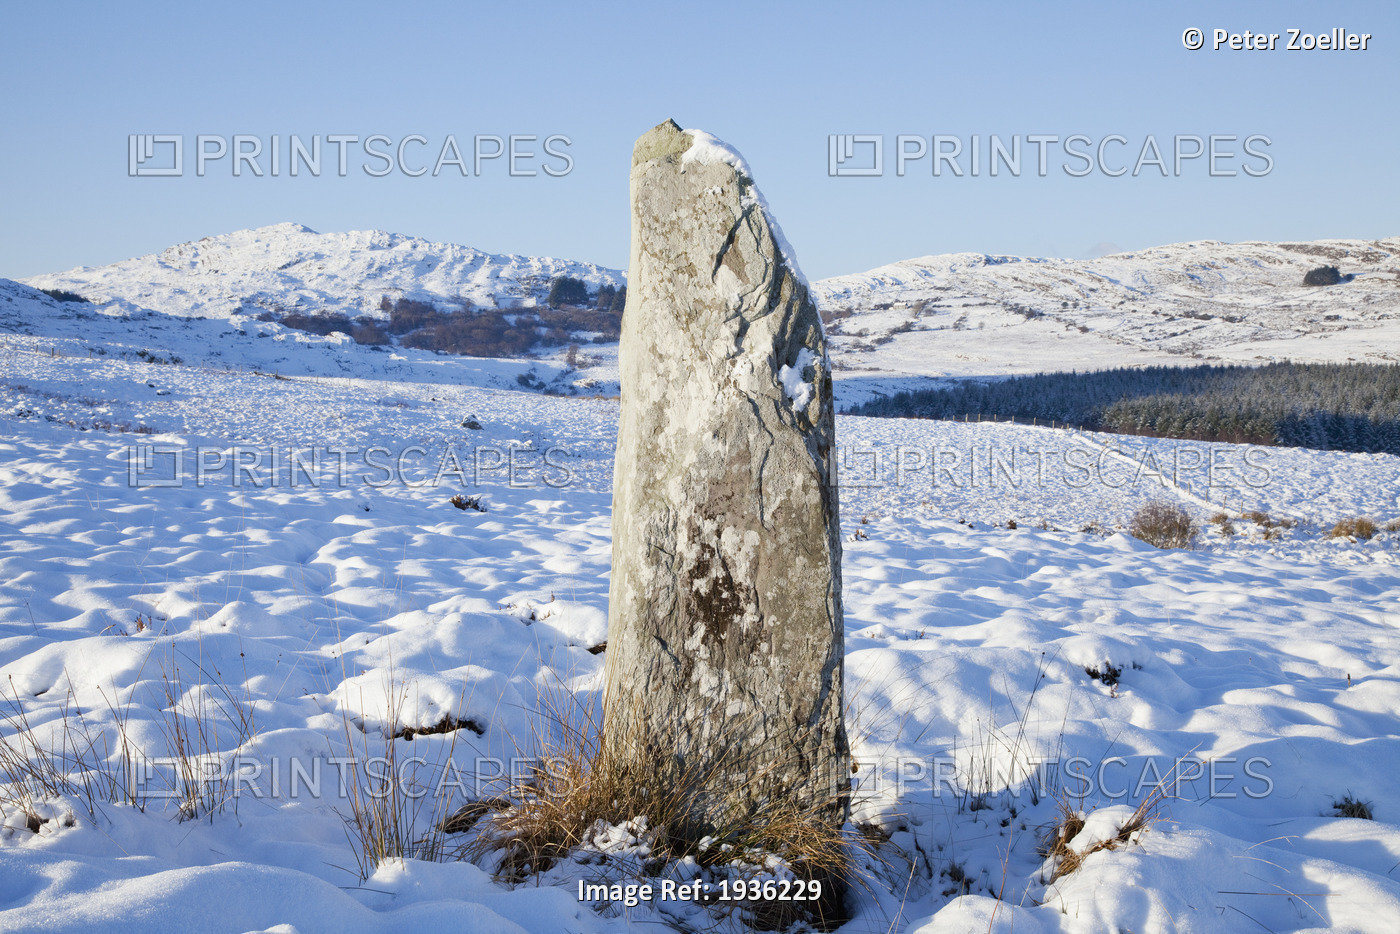 Standing Stone In Winter; Blackwater County Kerry Ireland